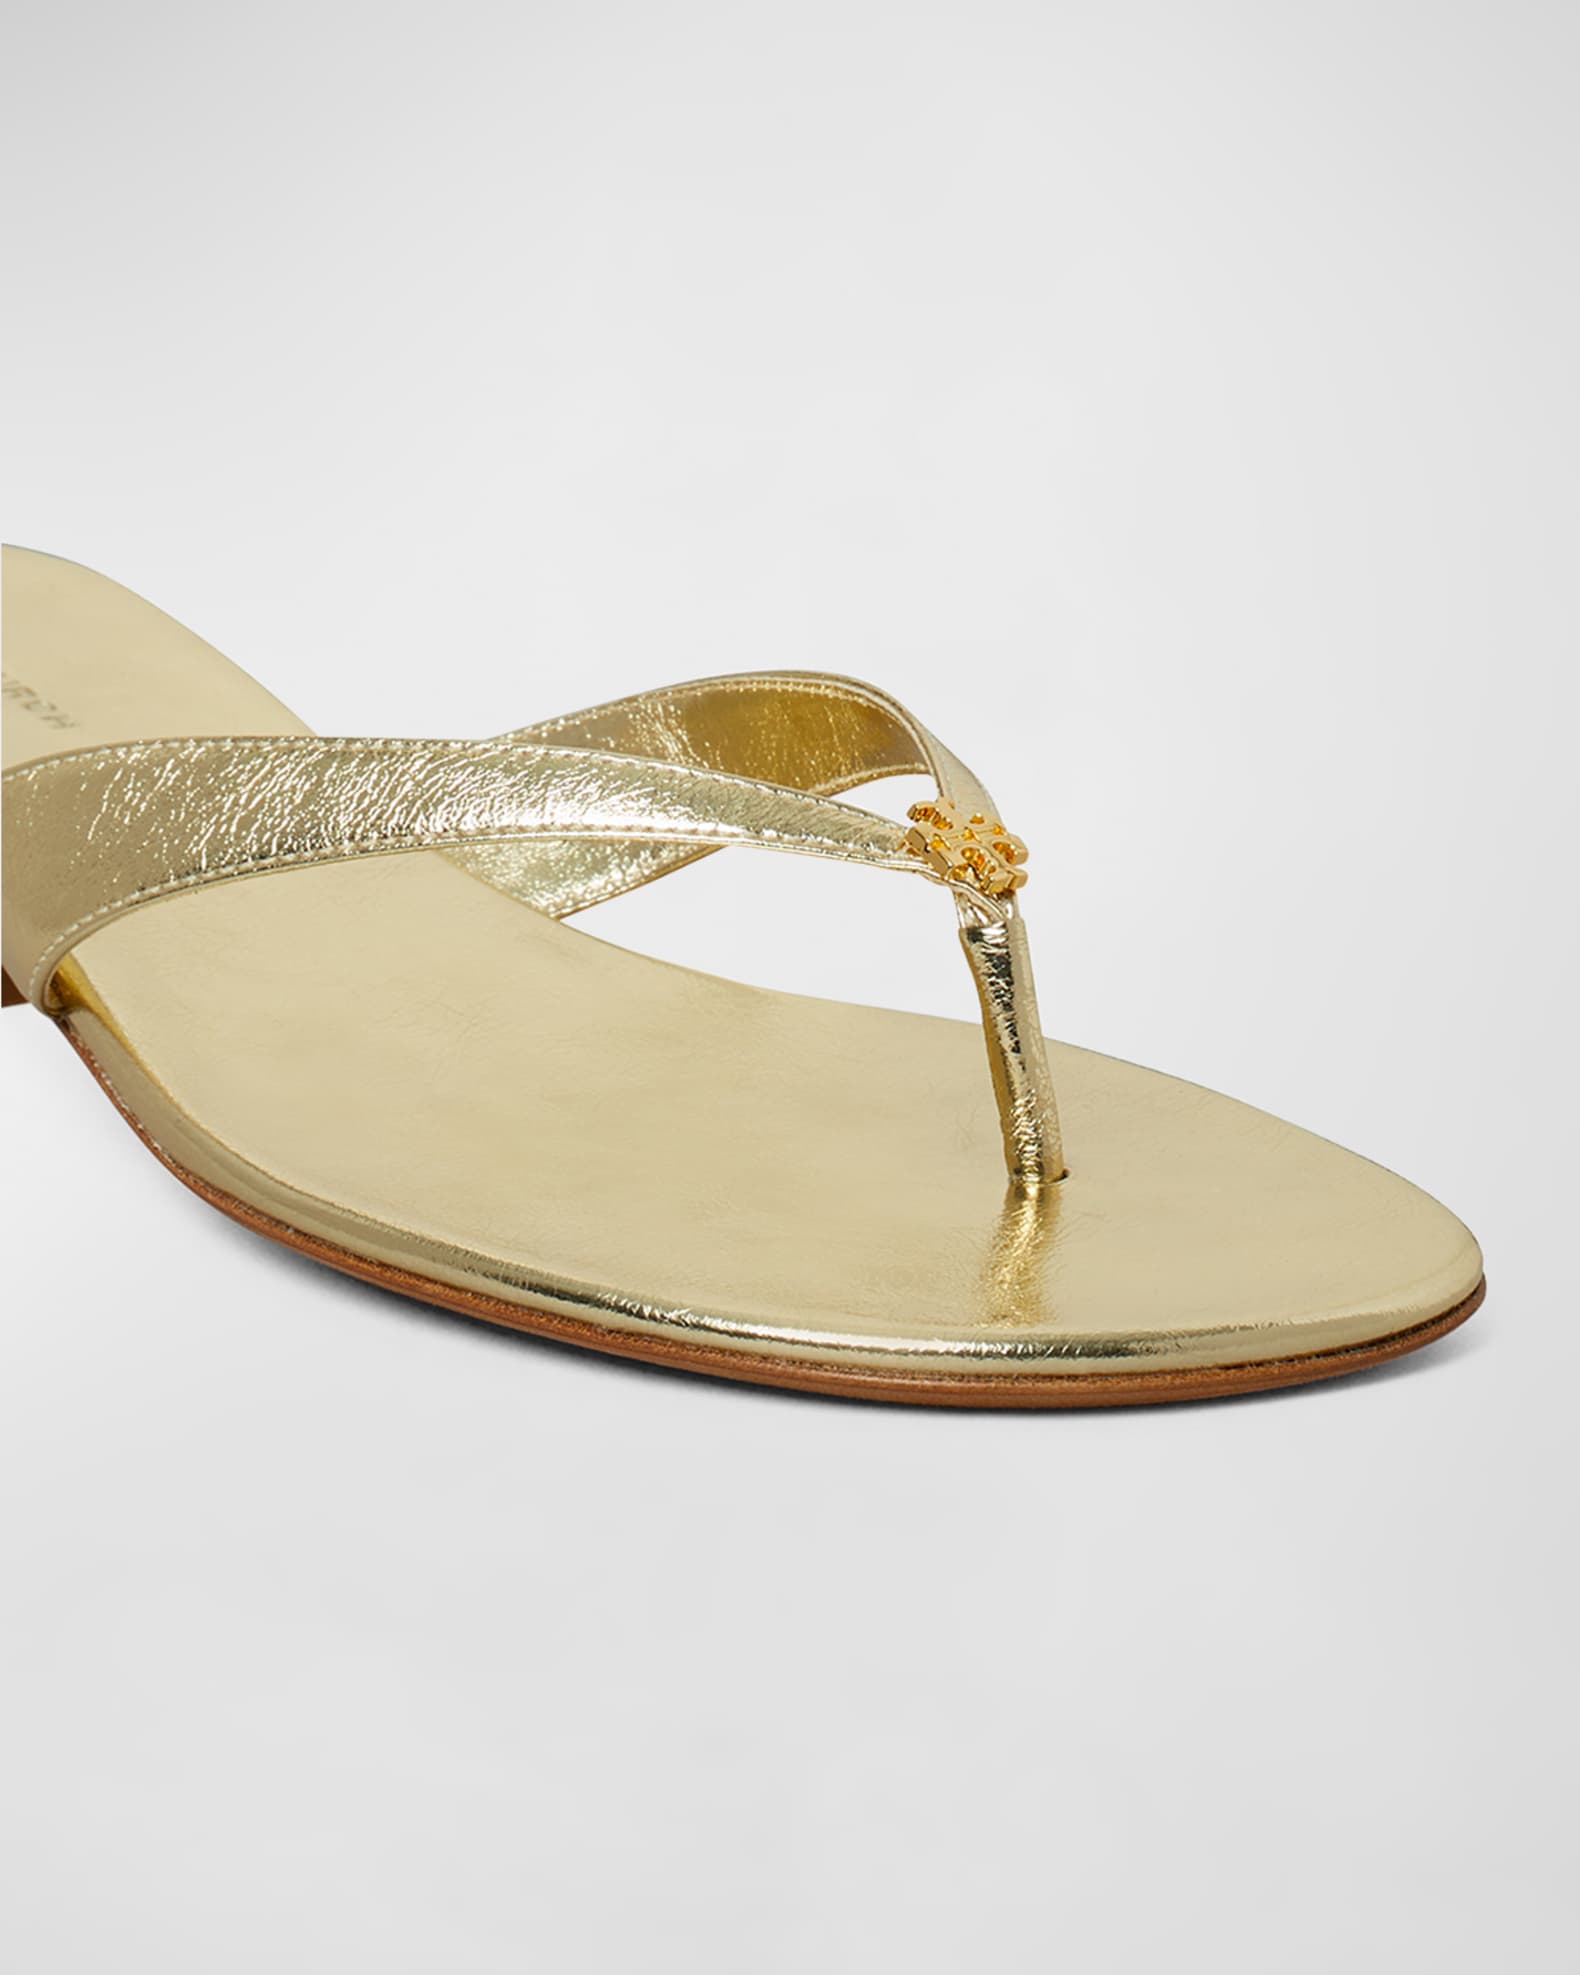 Tory Burch Benton Sandals, Size 6.5 – Caterkids Hawaii